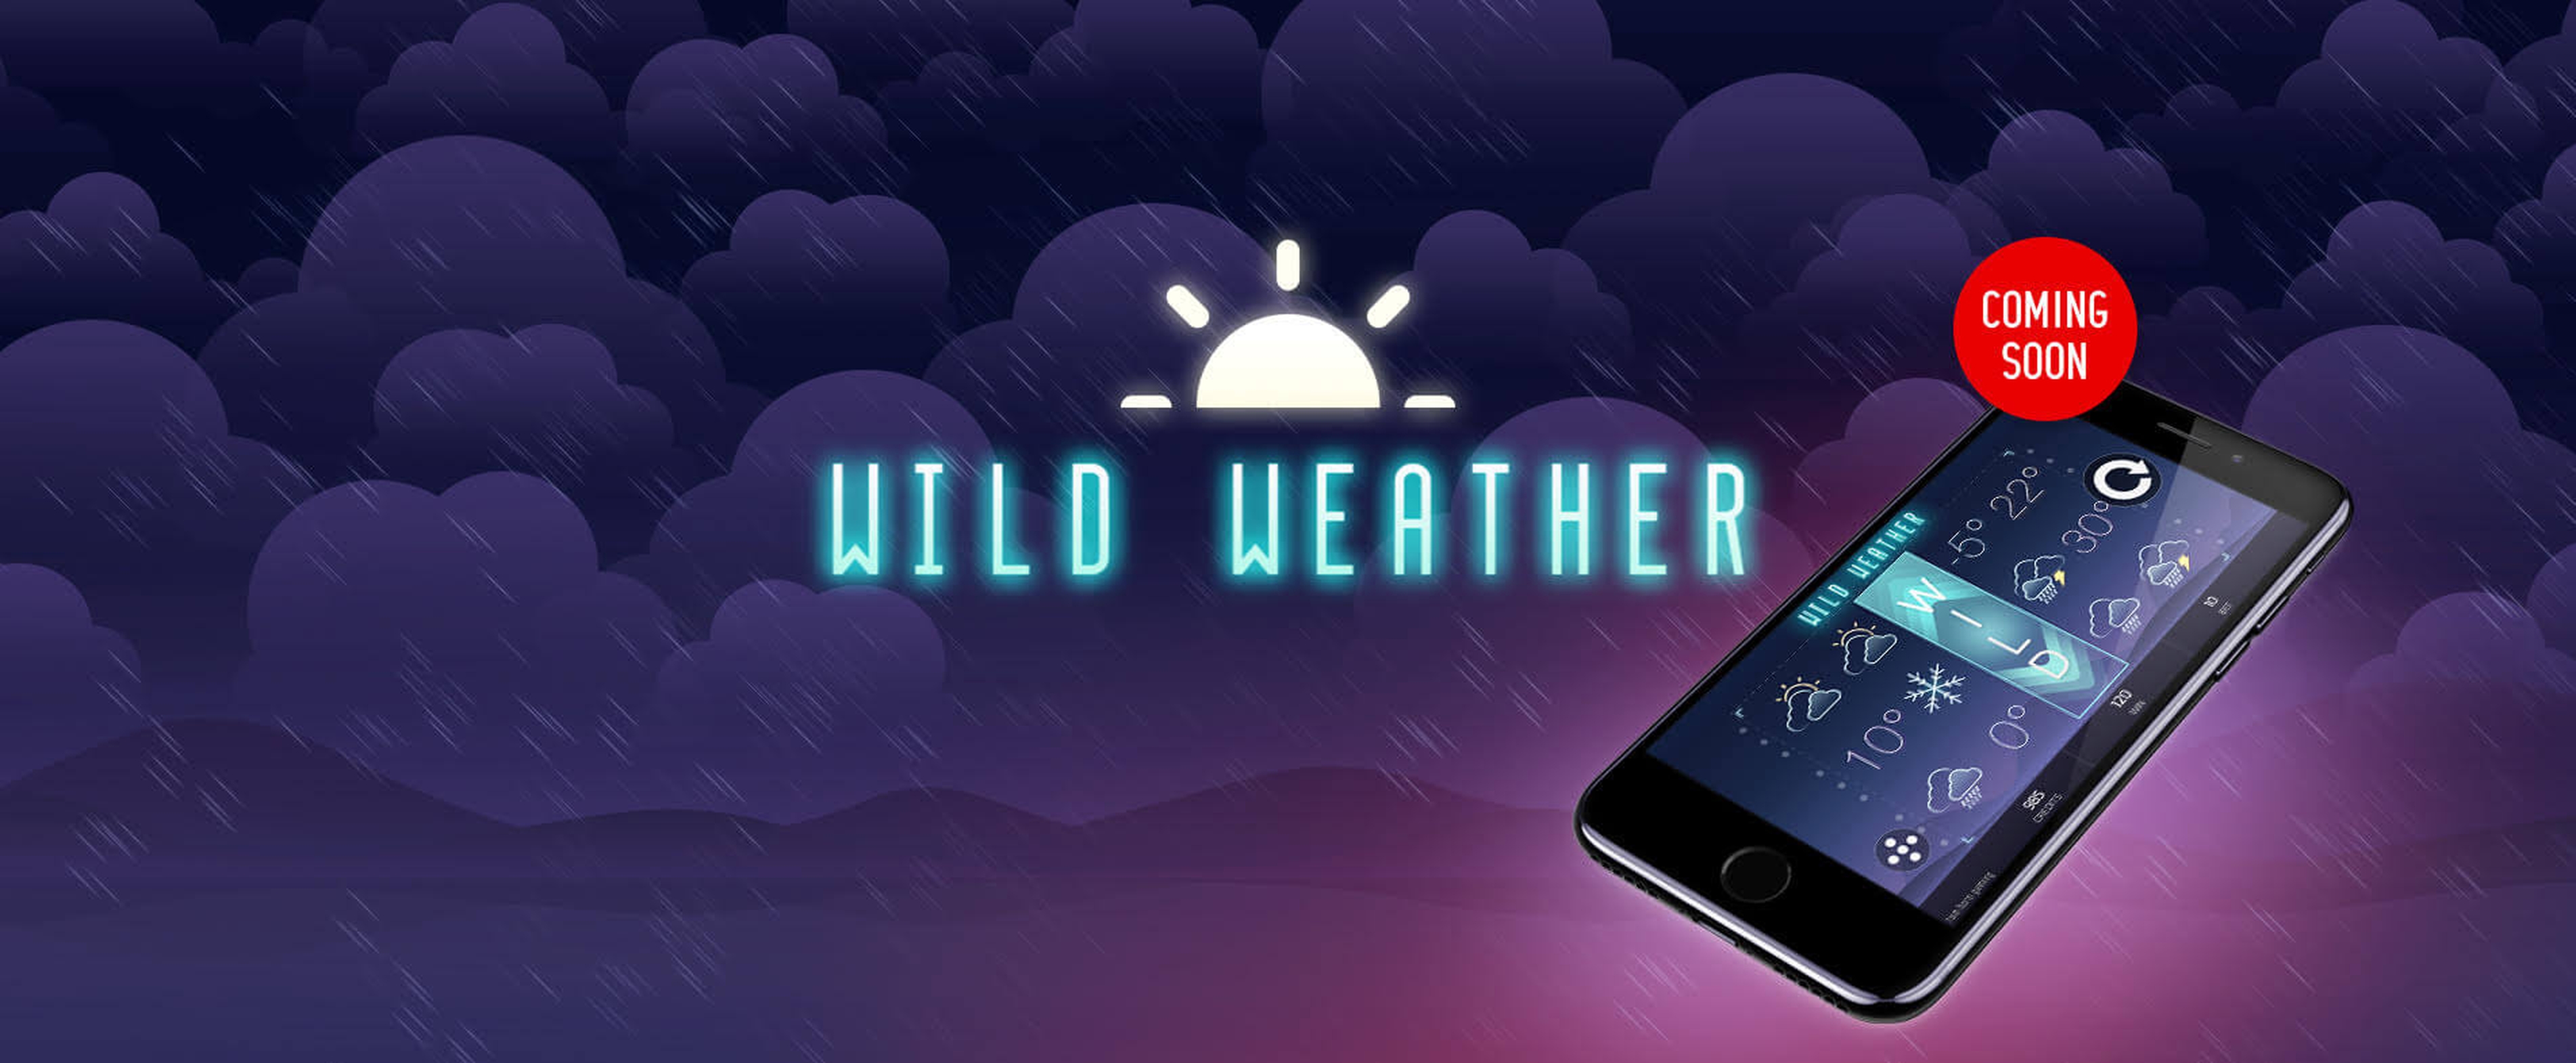 Wild Weather demo